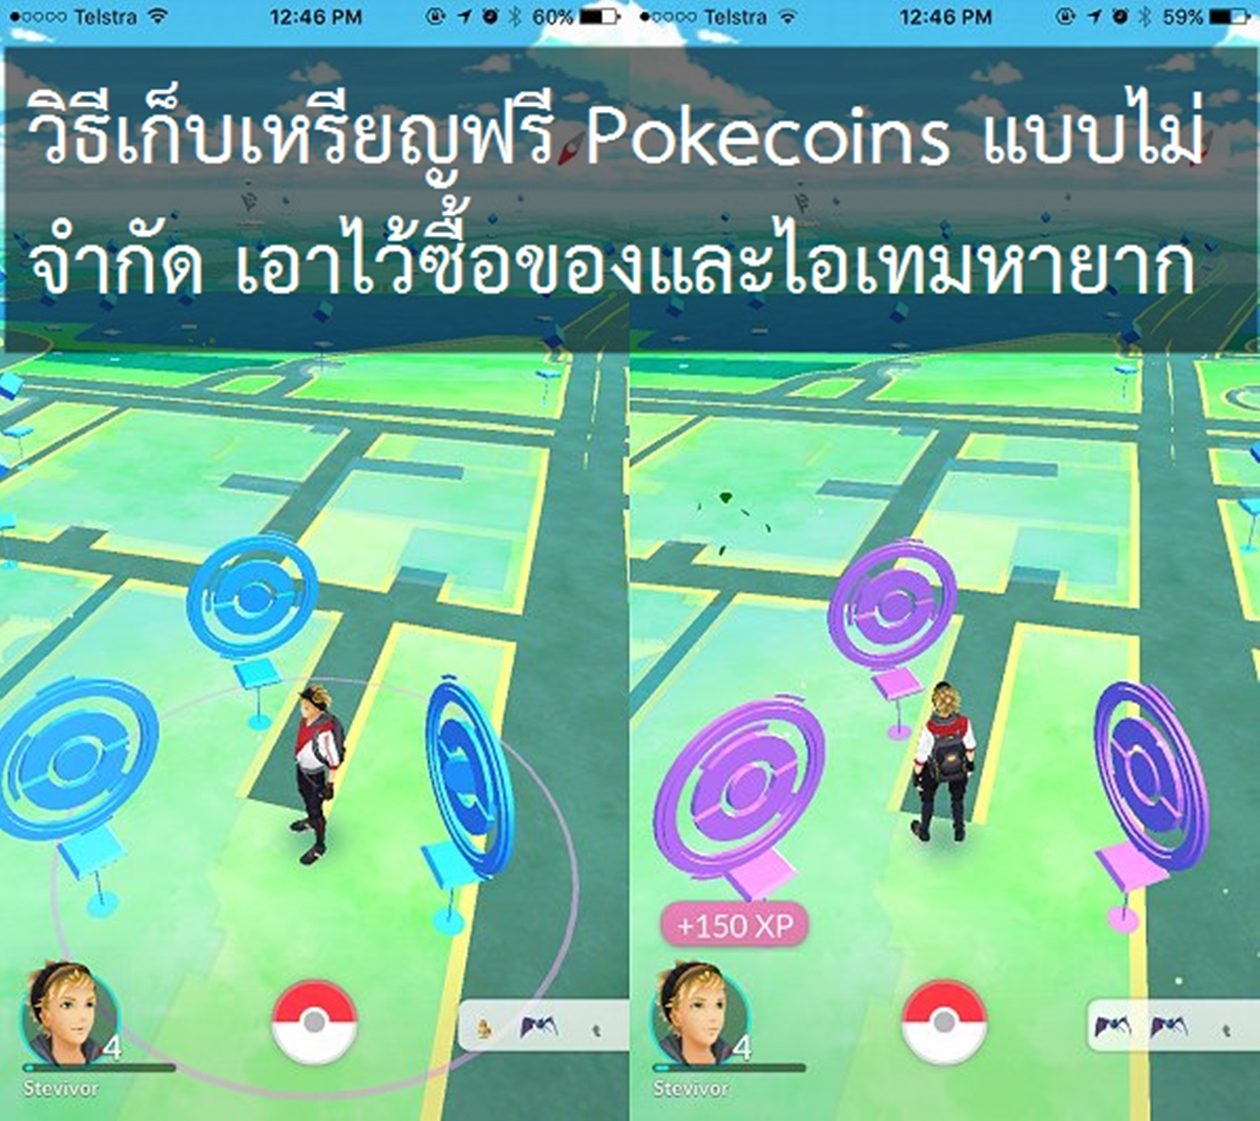 pokestops | Mobile | [Pokemon Go Tip] วิธีเก็บเหรียญฟรี Pokecoins แบบไม่จำกัด เอาไว้ซื้อของและไอเทมหายากโดยไม่ต้องเติมเงิน